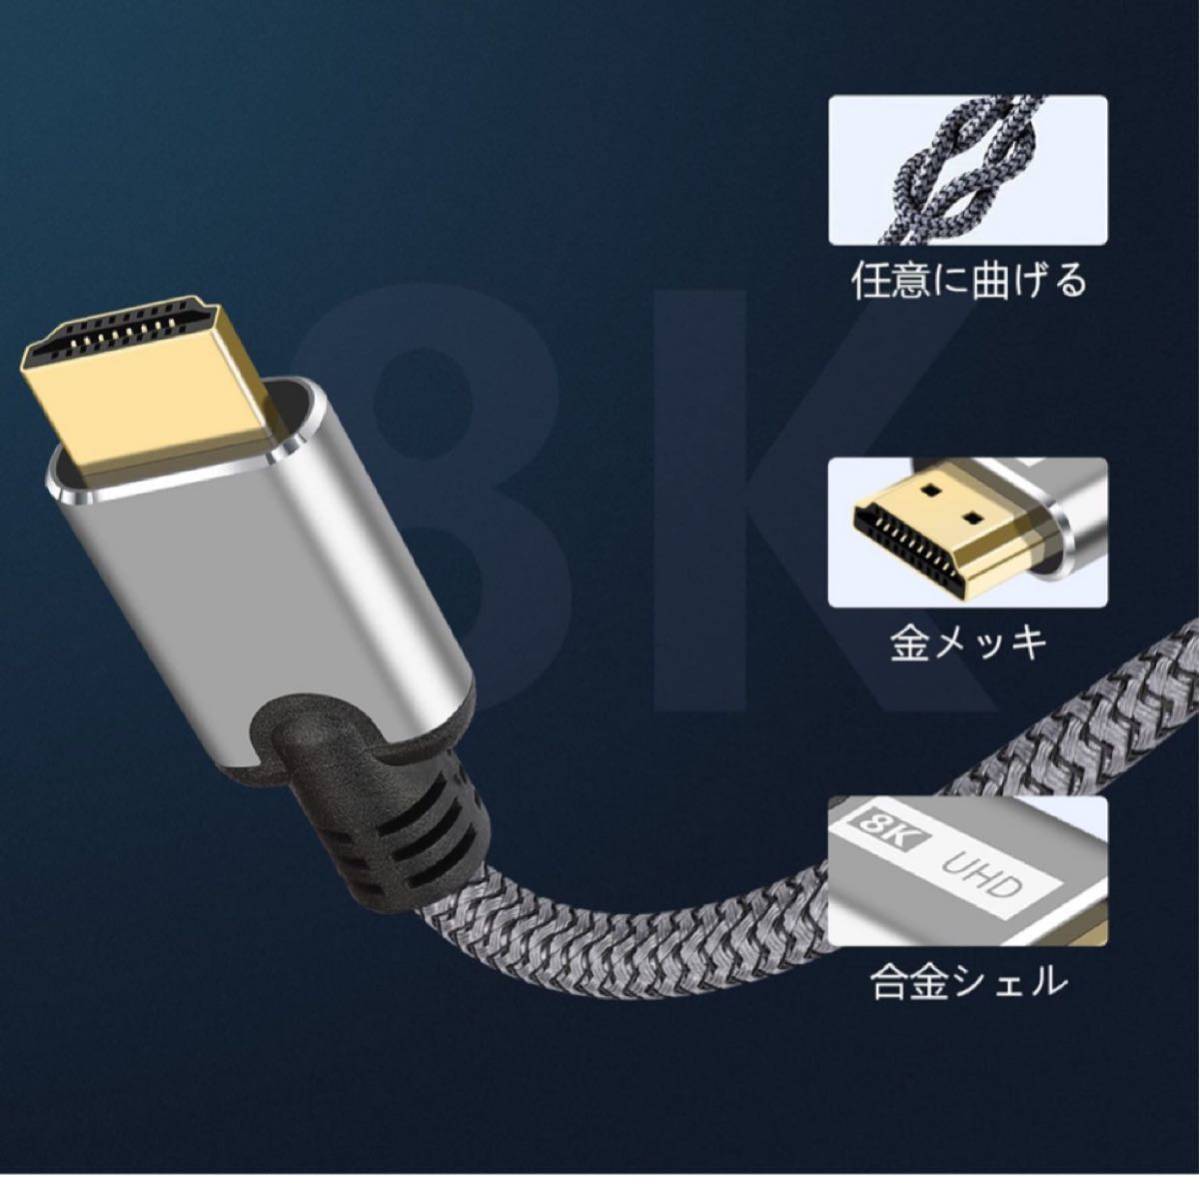 8K HDMI кабель 2.1[2M выше комплектация версия ]MEEKI HDMI 2.1 стандарт 